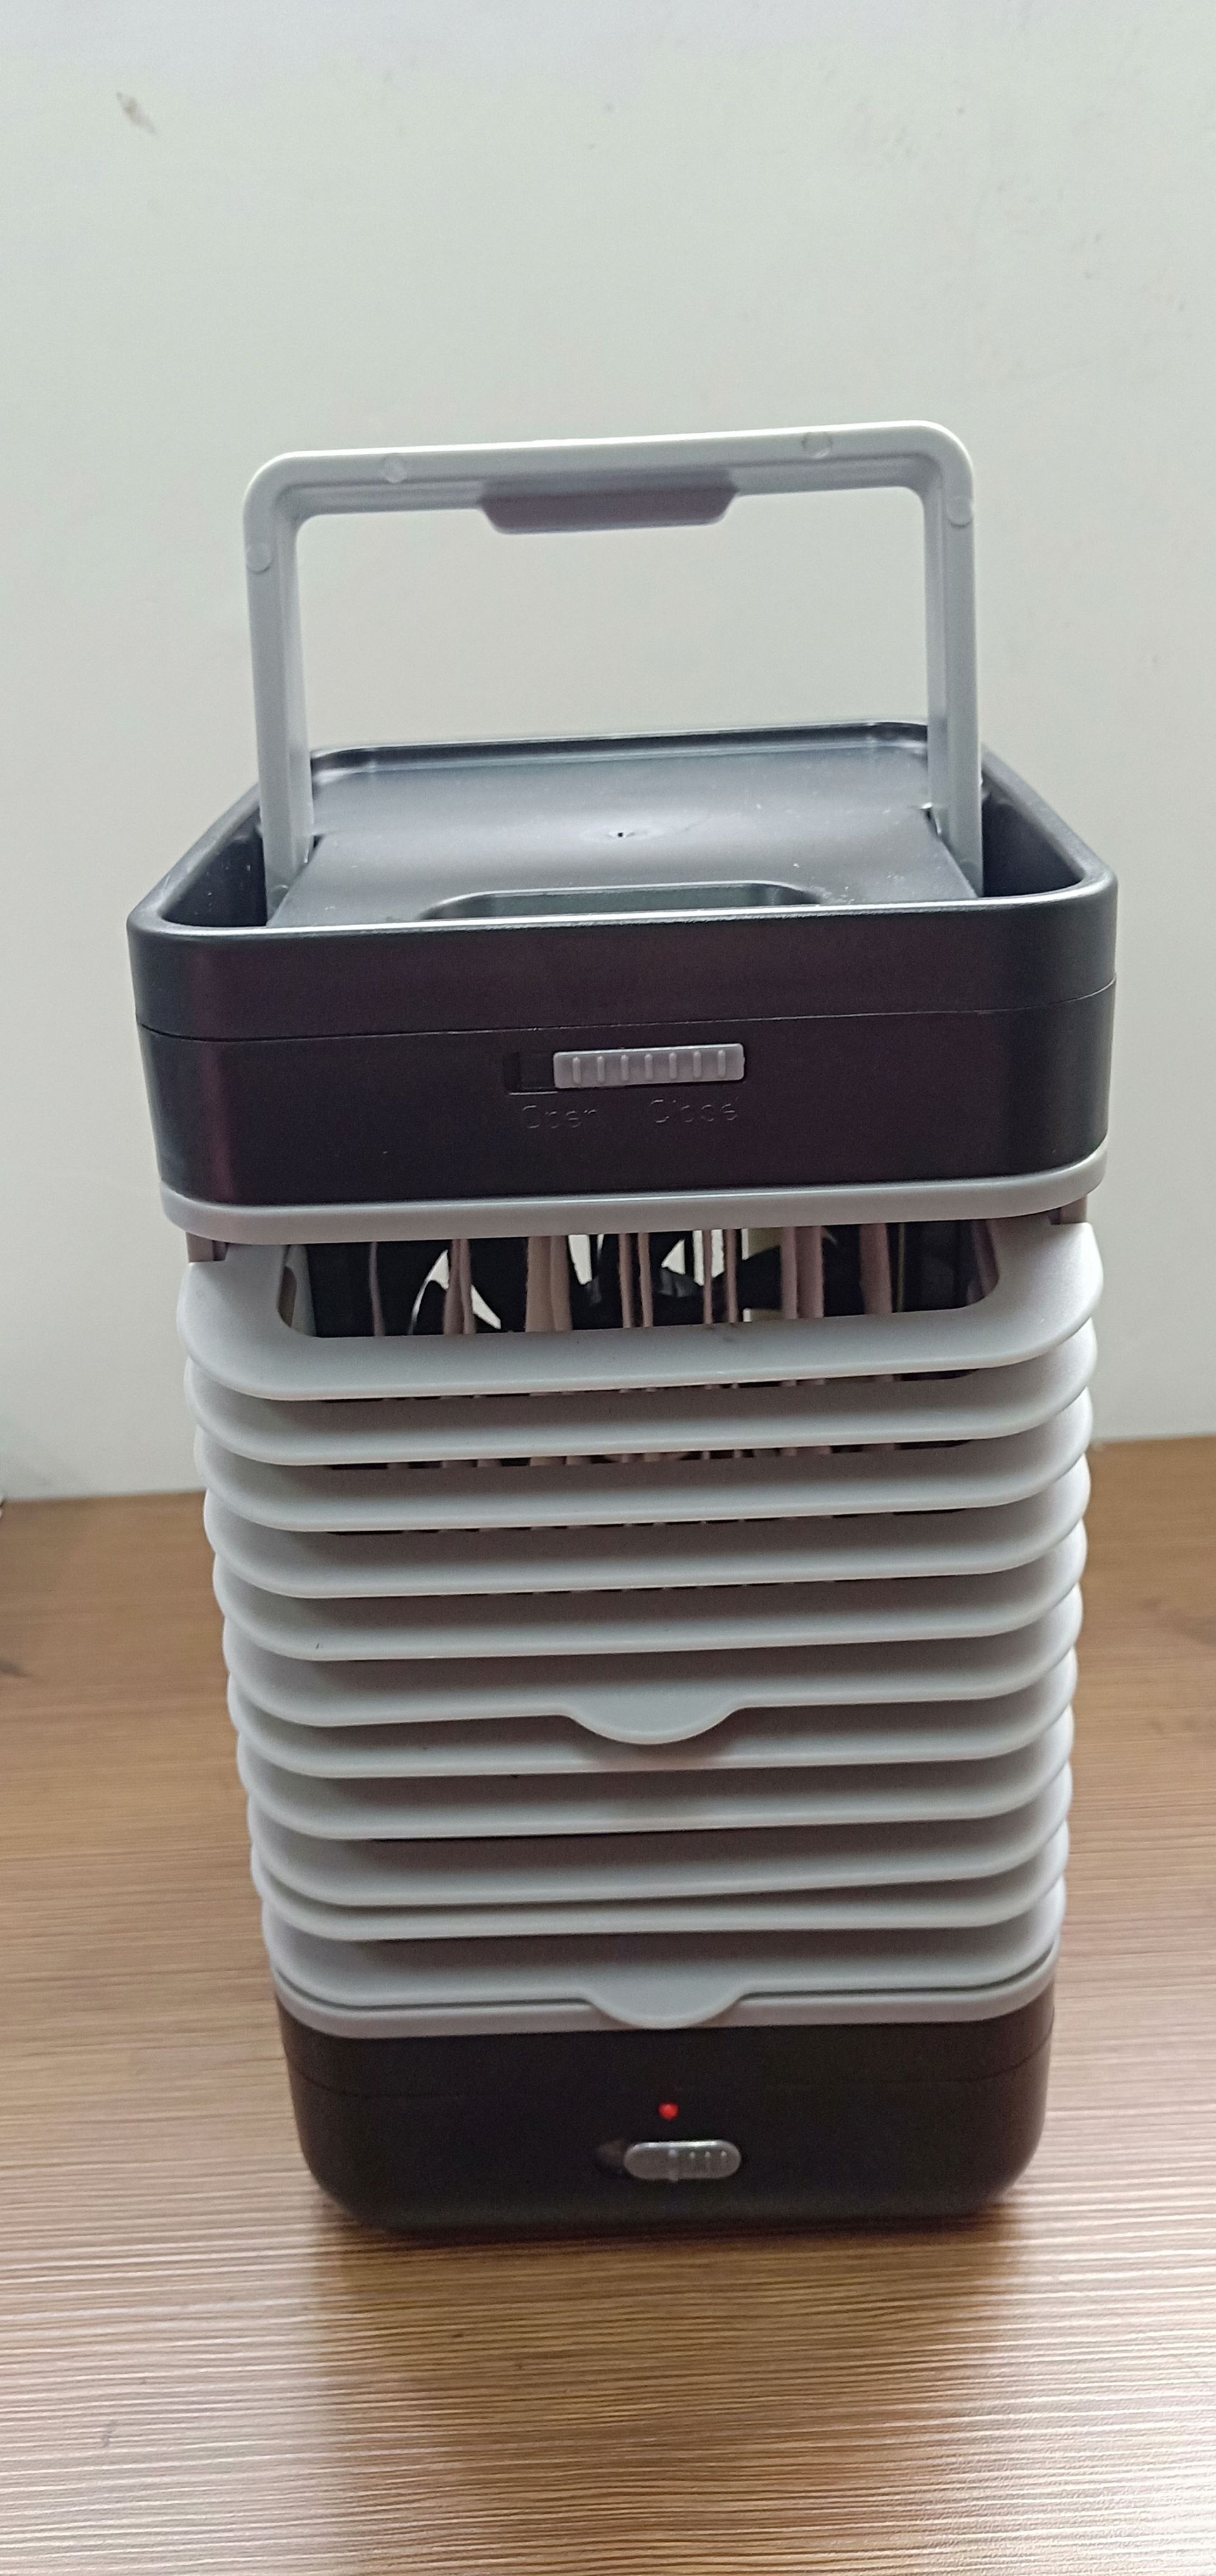 Piano Key Household Air Cooler Office Air Cooler Mini Air Cooler